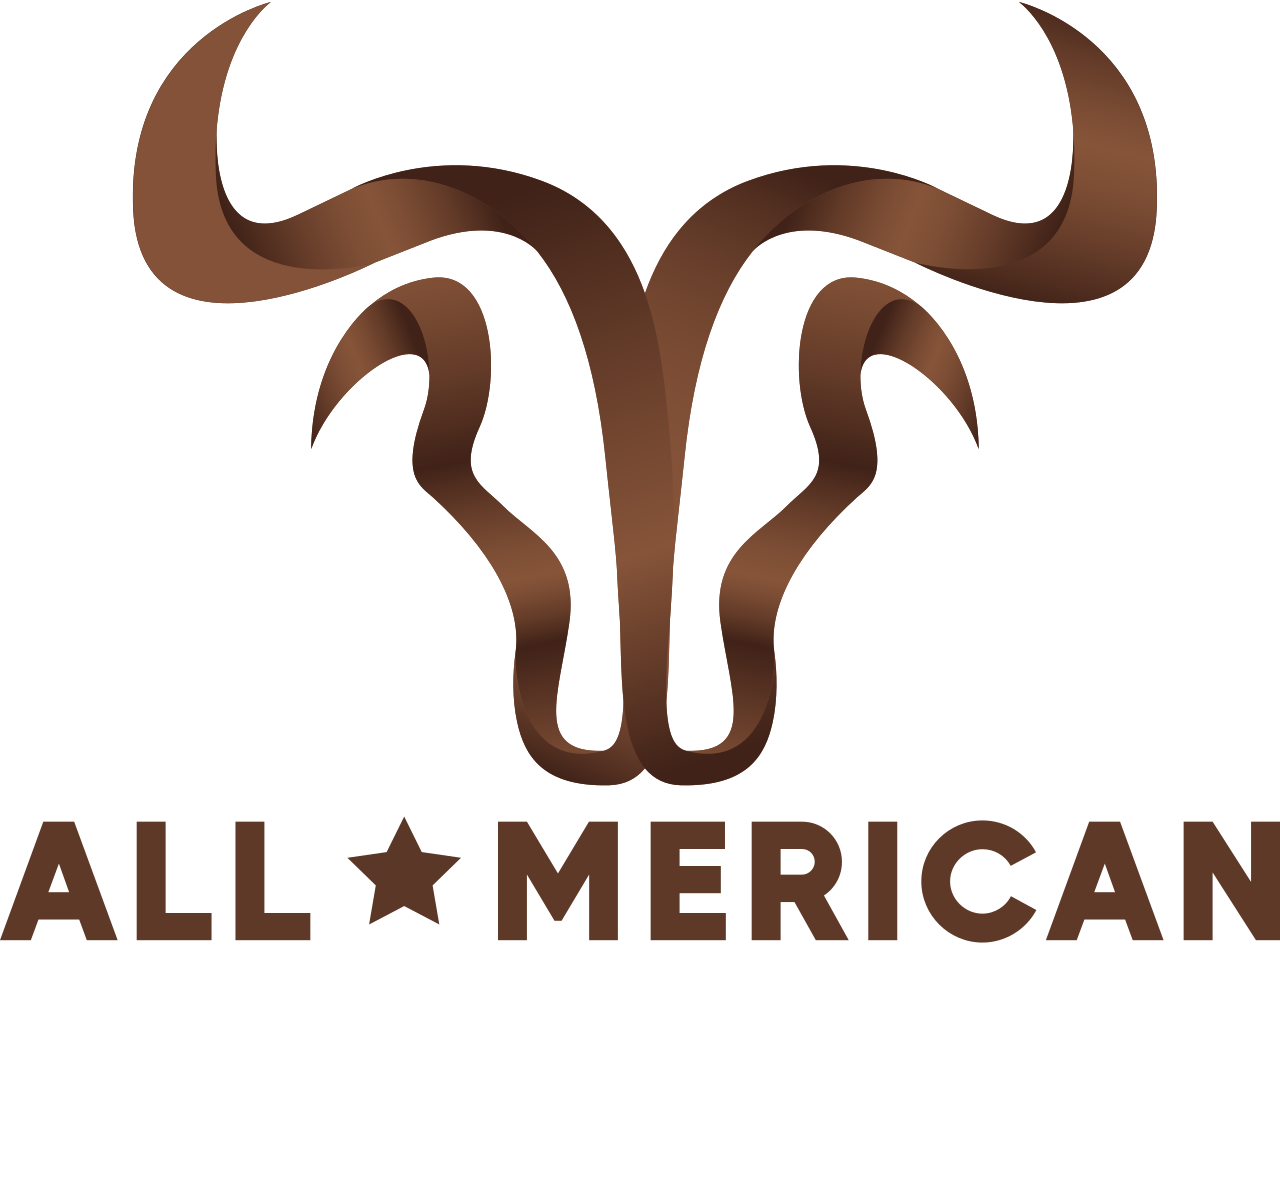 All ‘Merican's logo